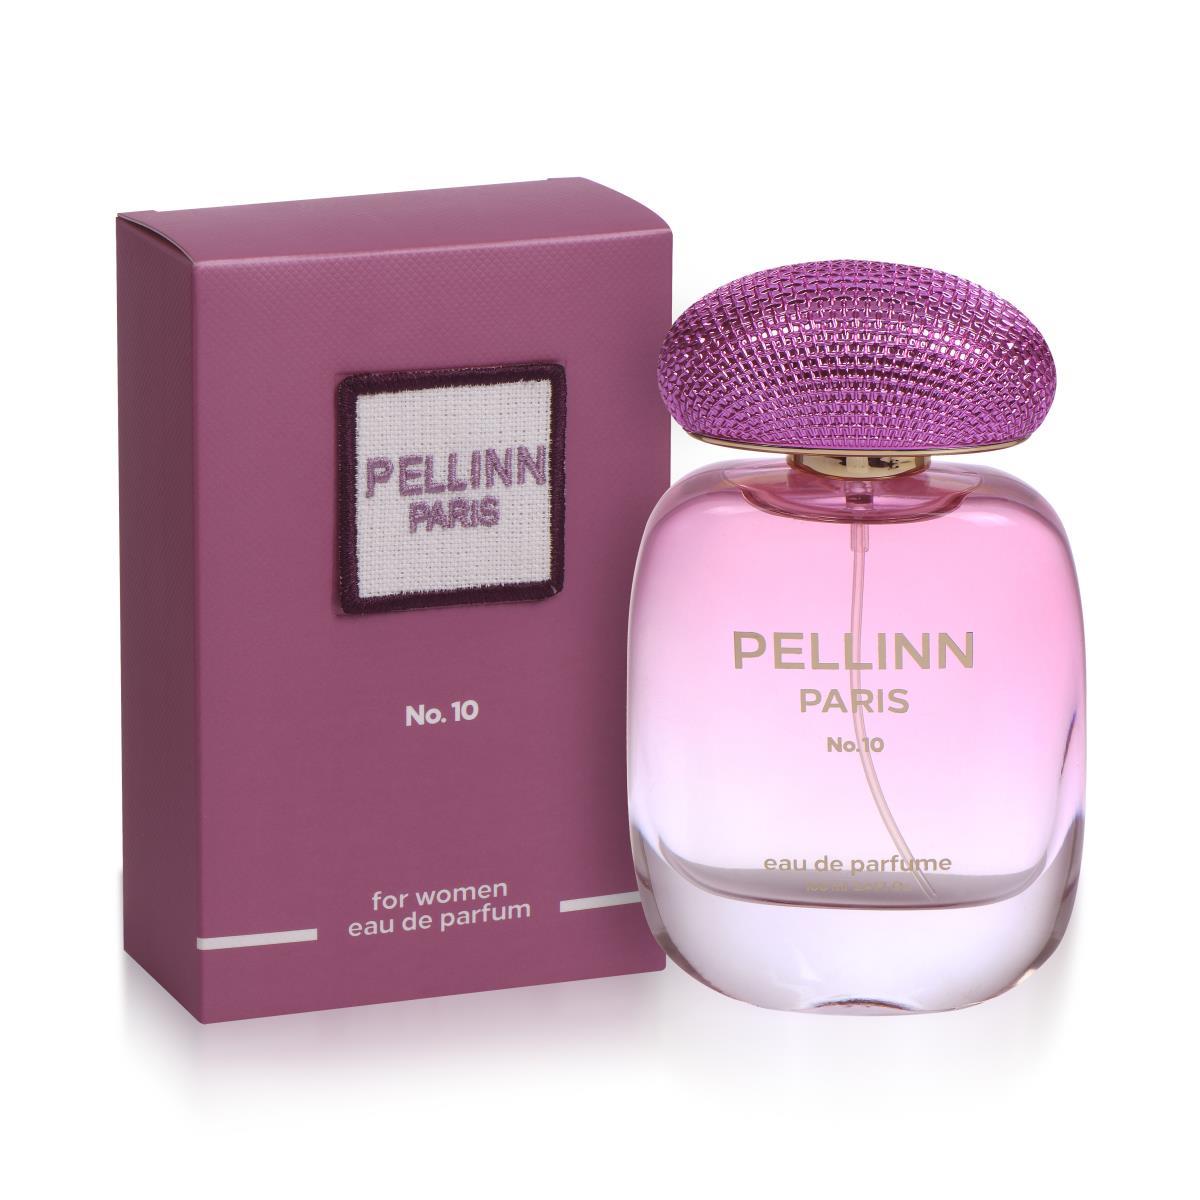 Pellinn Paris No.10 Floral and Musk Woman EDP Perfume 100 ml  Pellinn Paris Perfume